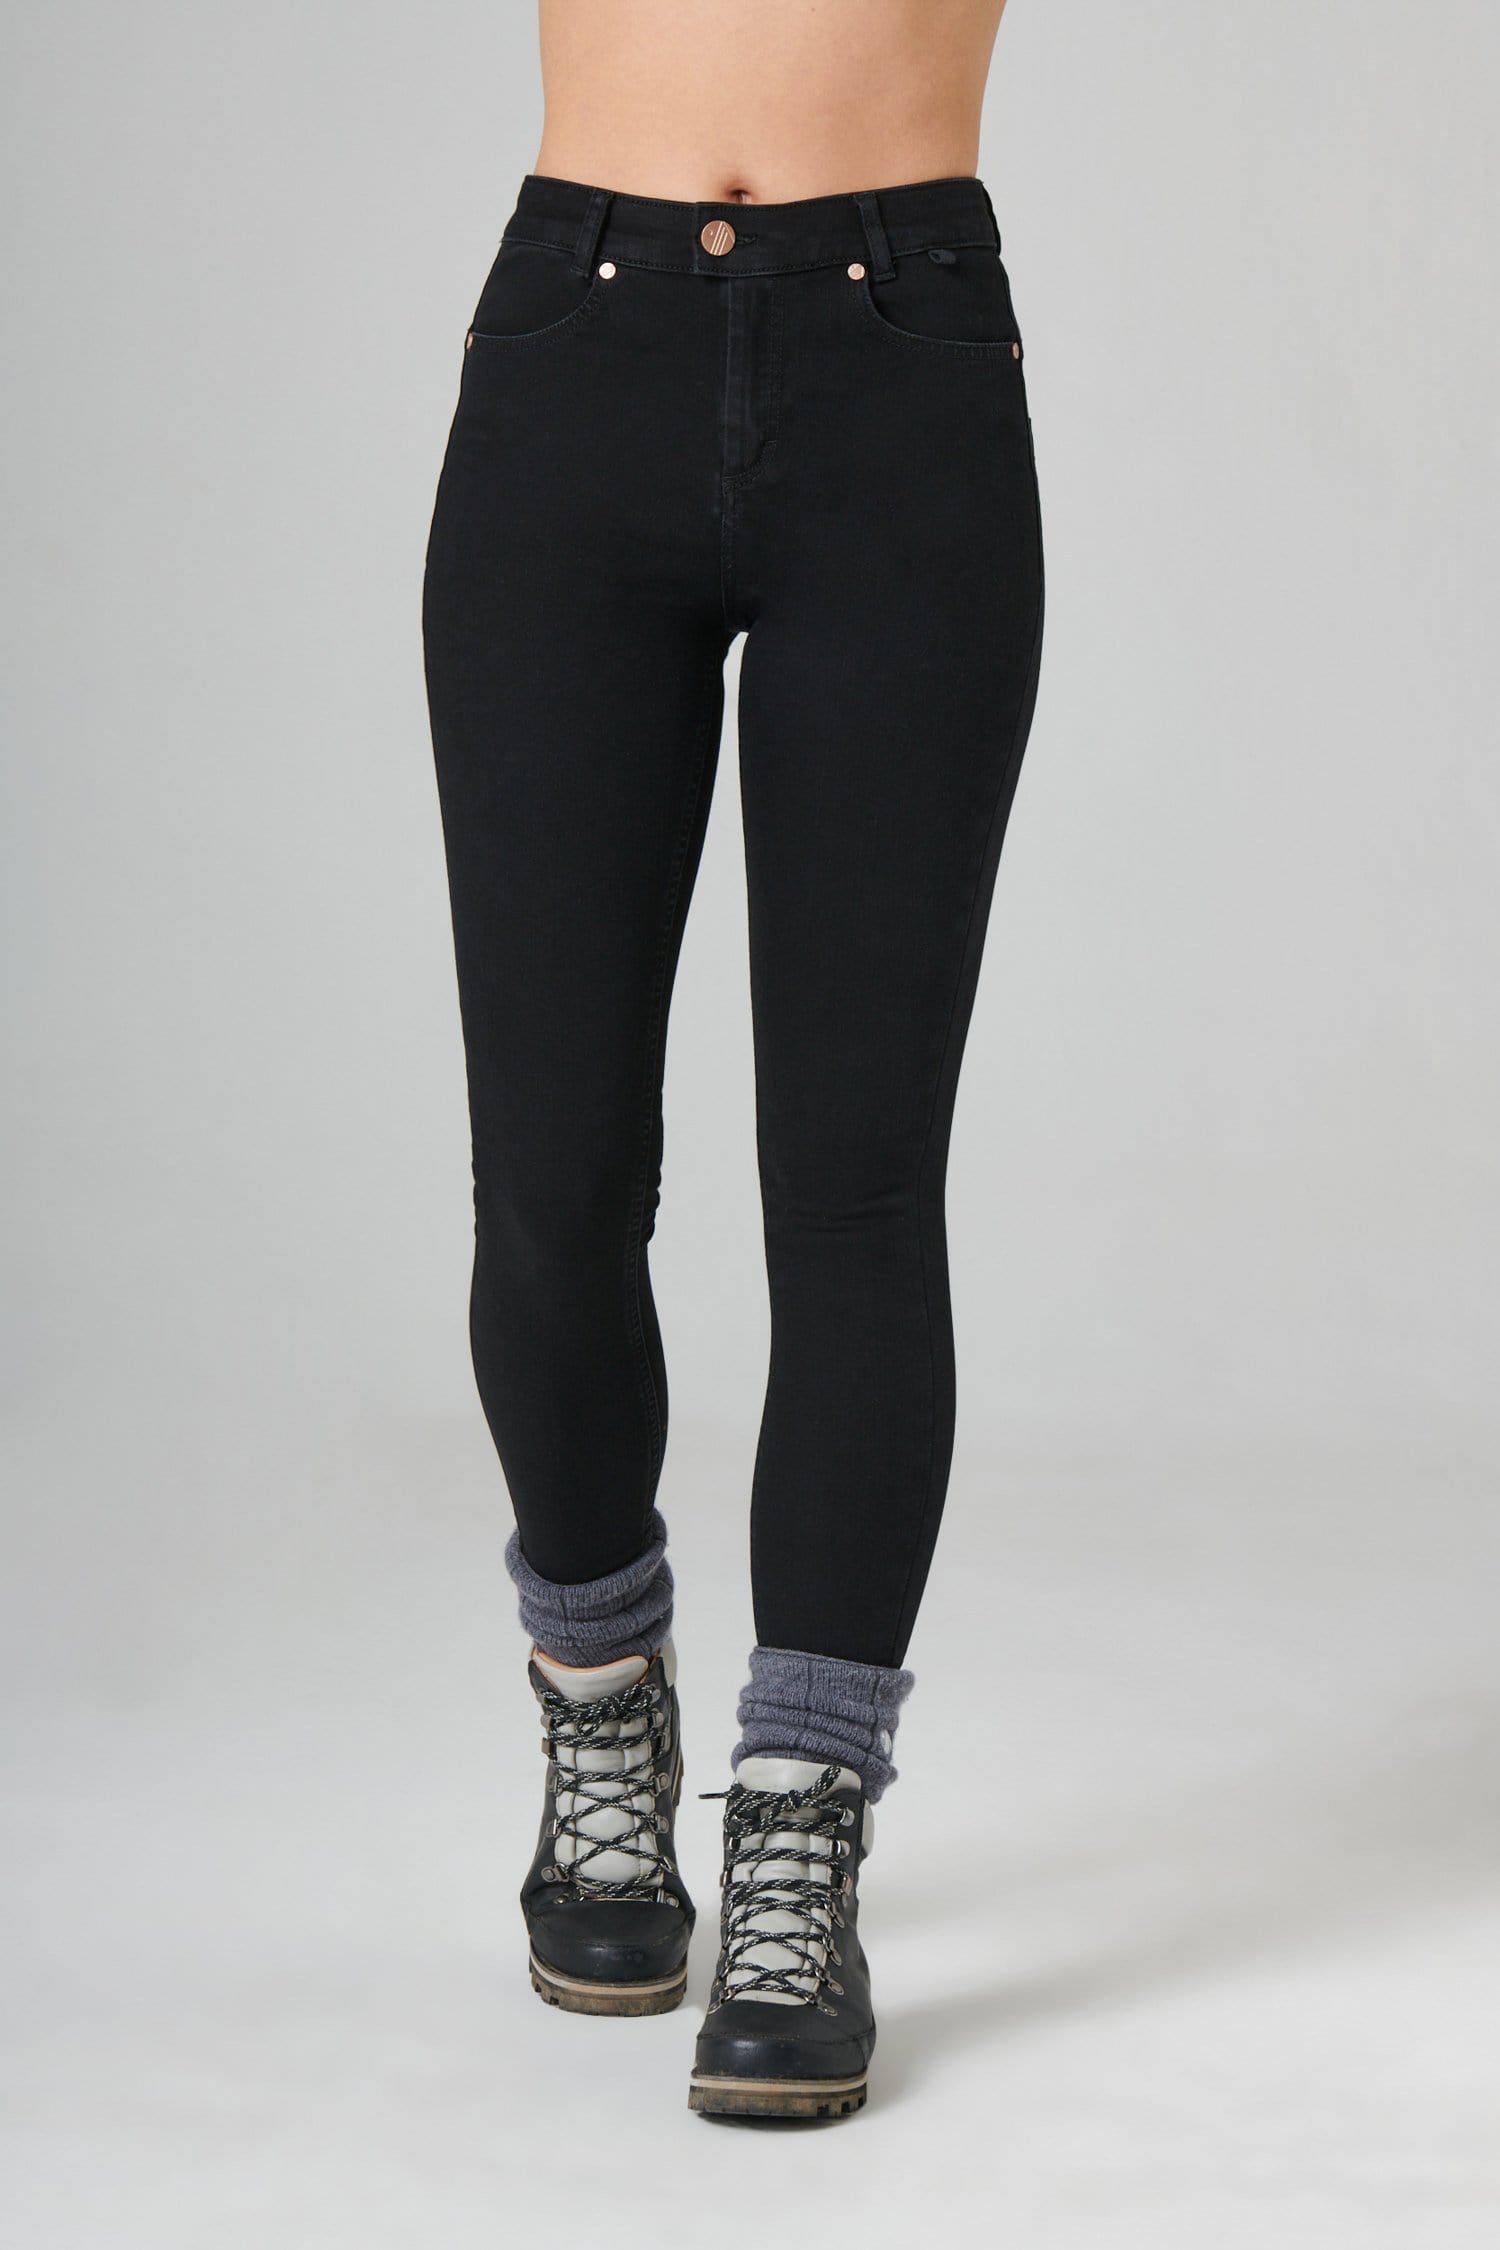 The Skinny Outdoor Jeans - Black Denim - 24p / Uk6 - Womens - Acai Outdoorwear